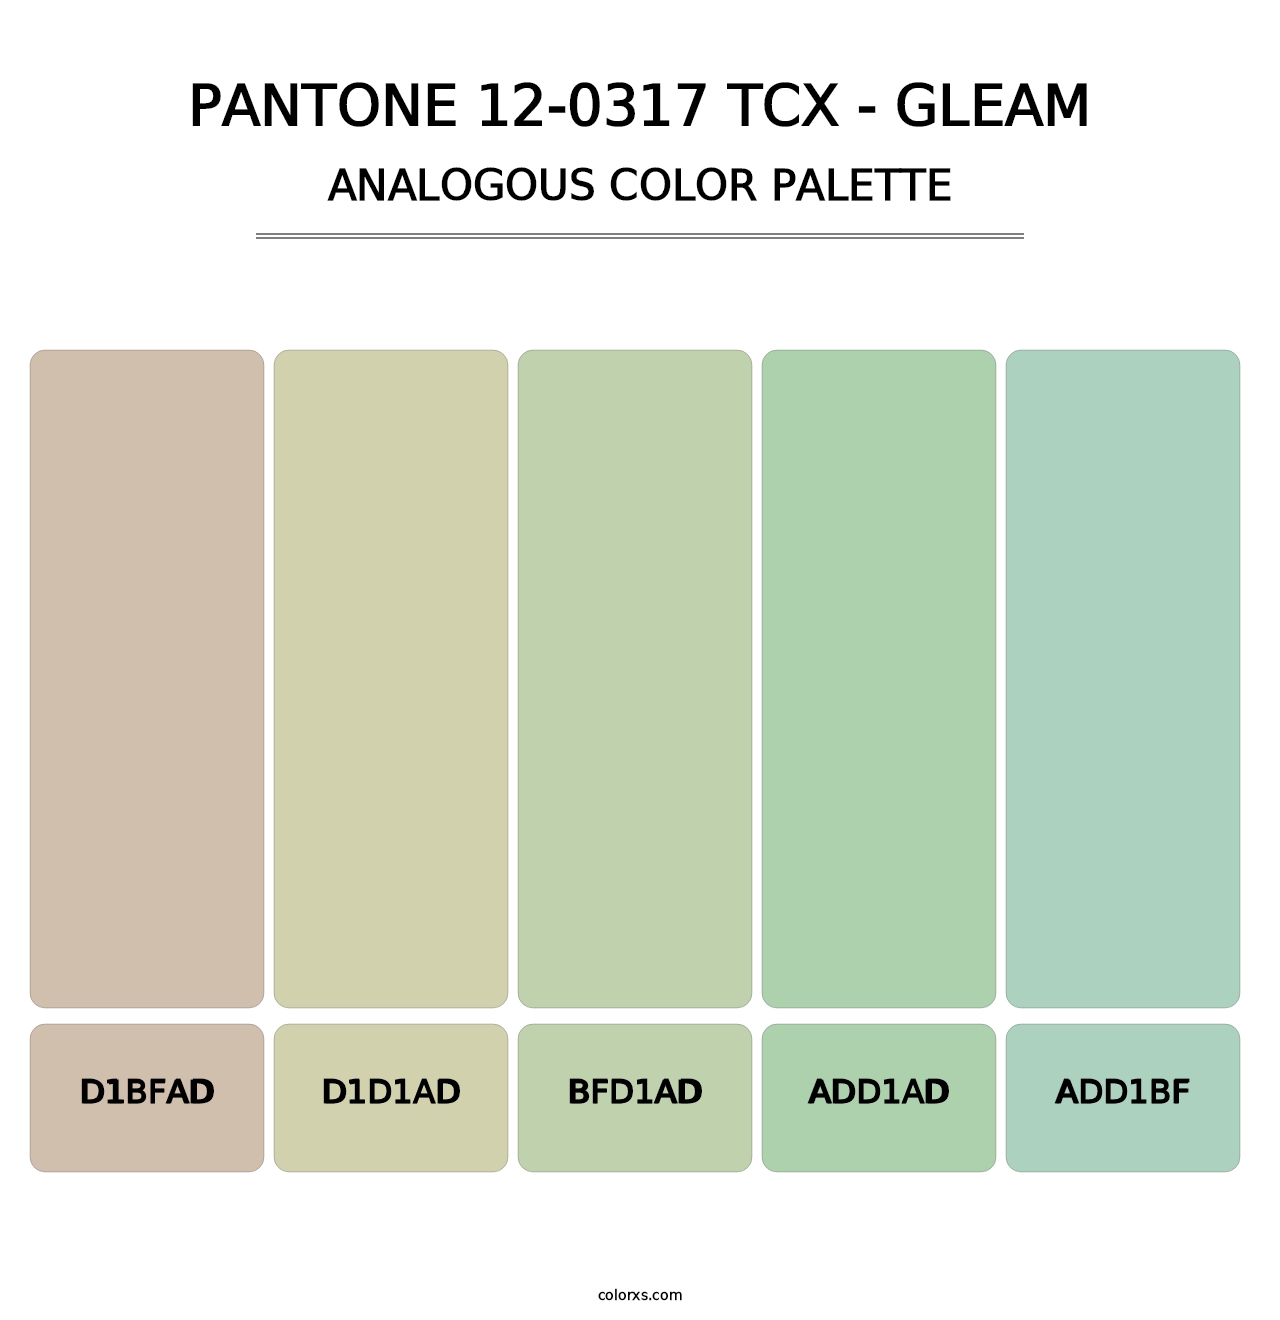 PANTONE 12-0317 TCX - Gleam - Analogous Color Palette